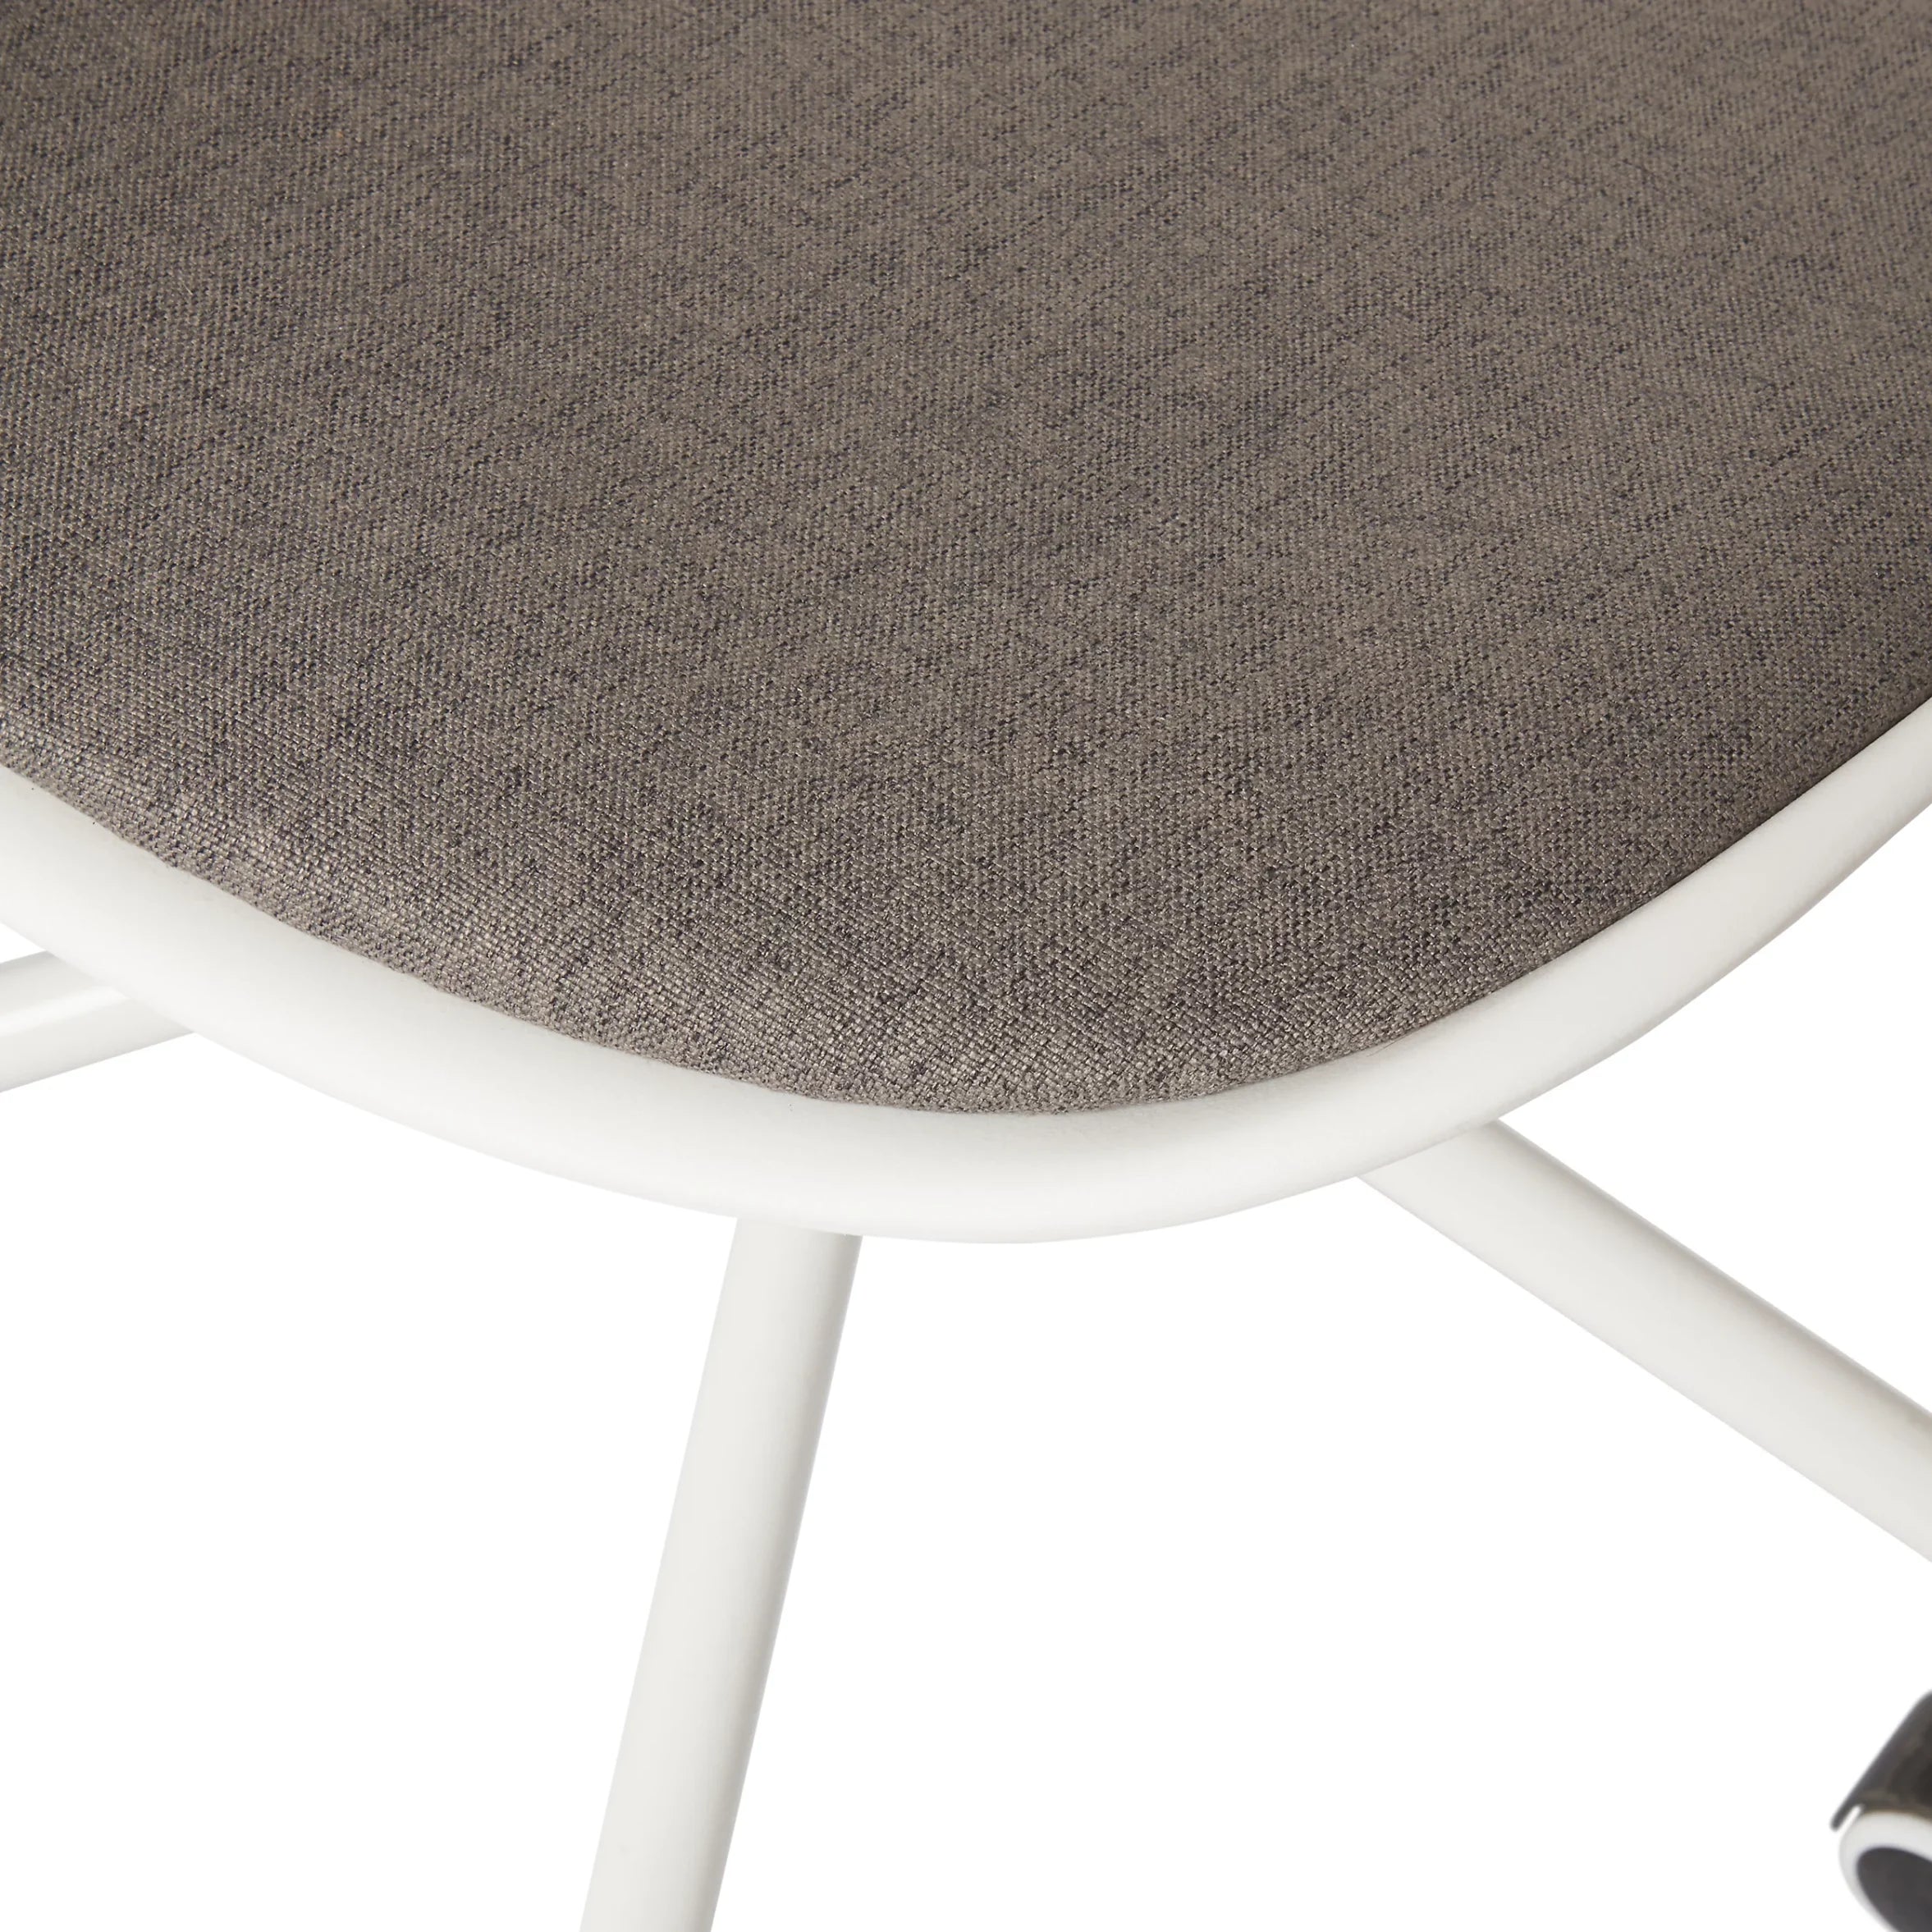 Tivissa White Office chair (H)820mm (W)480mm (D)560mm 0627